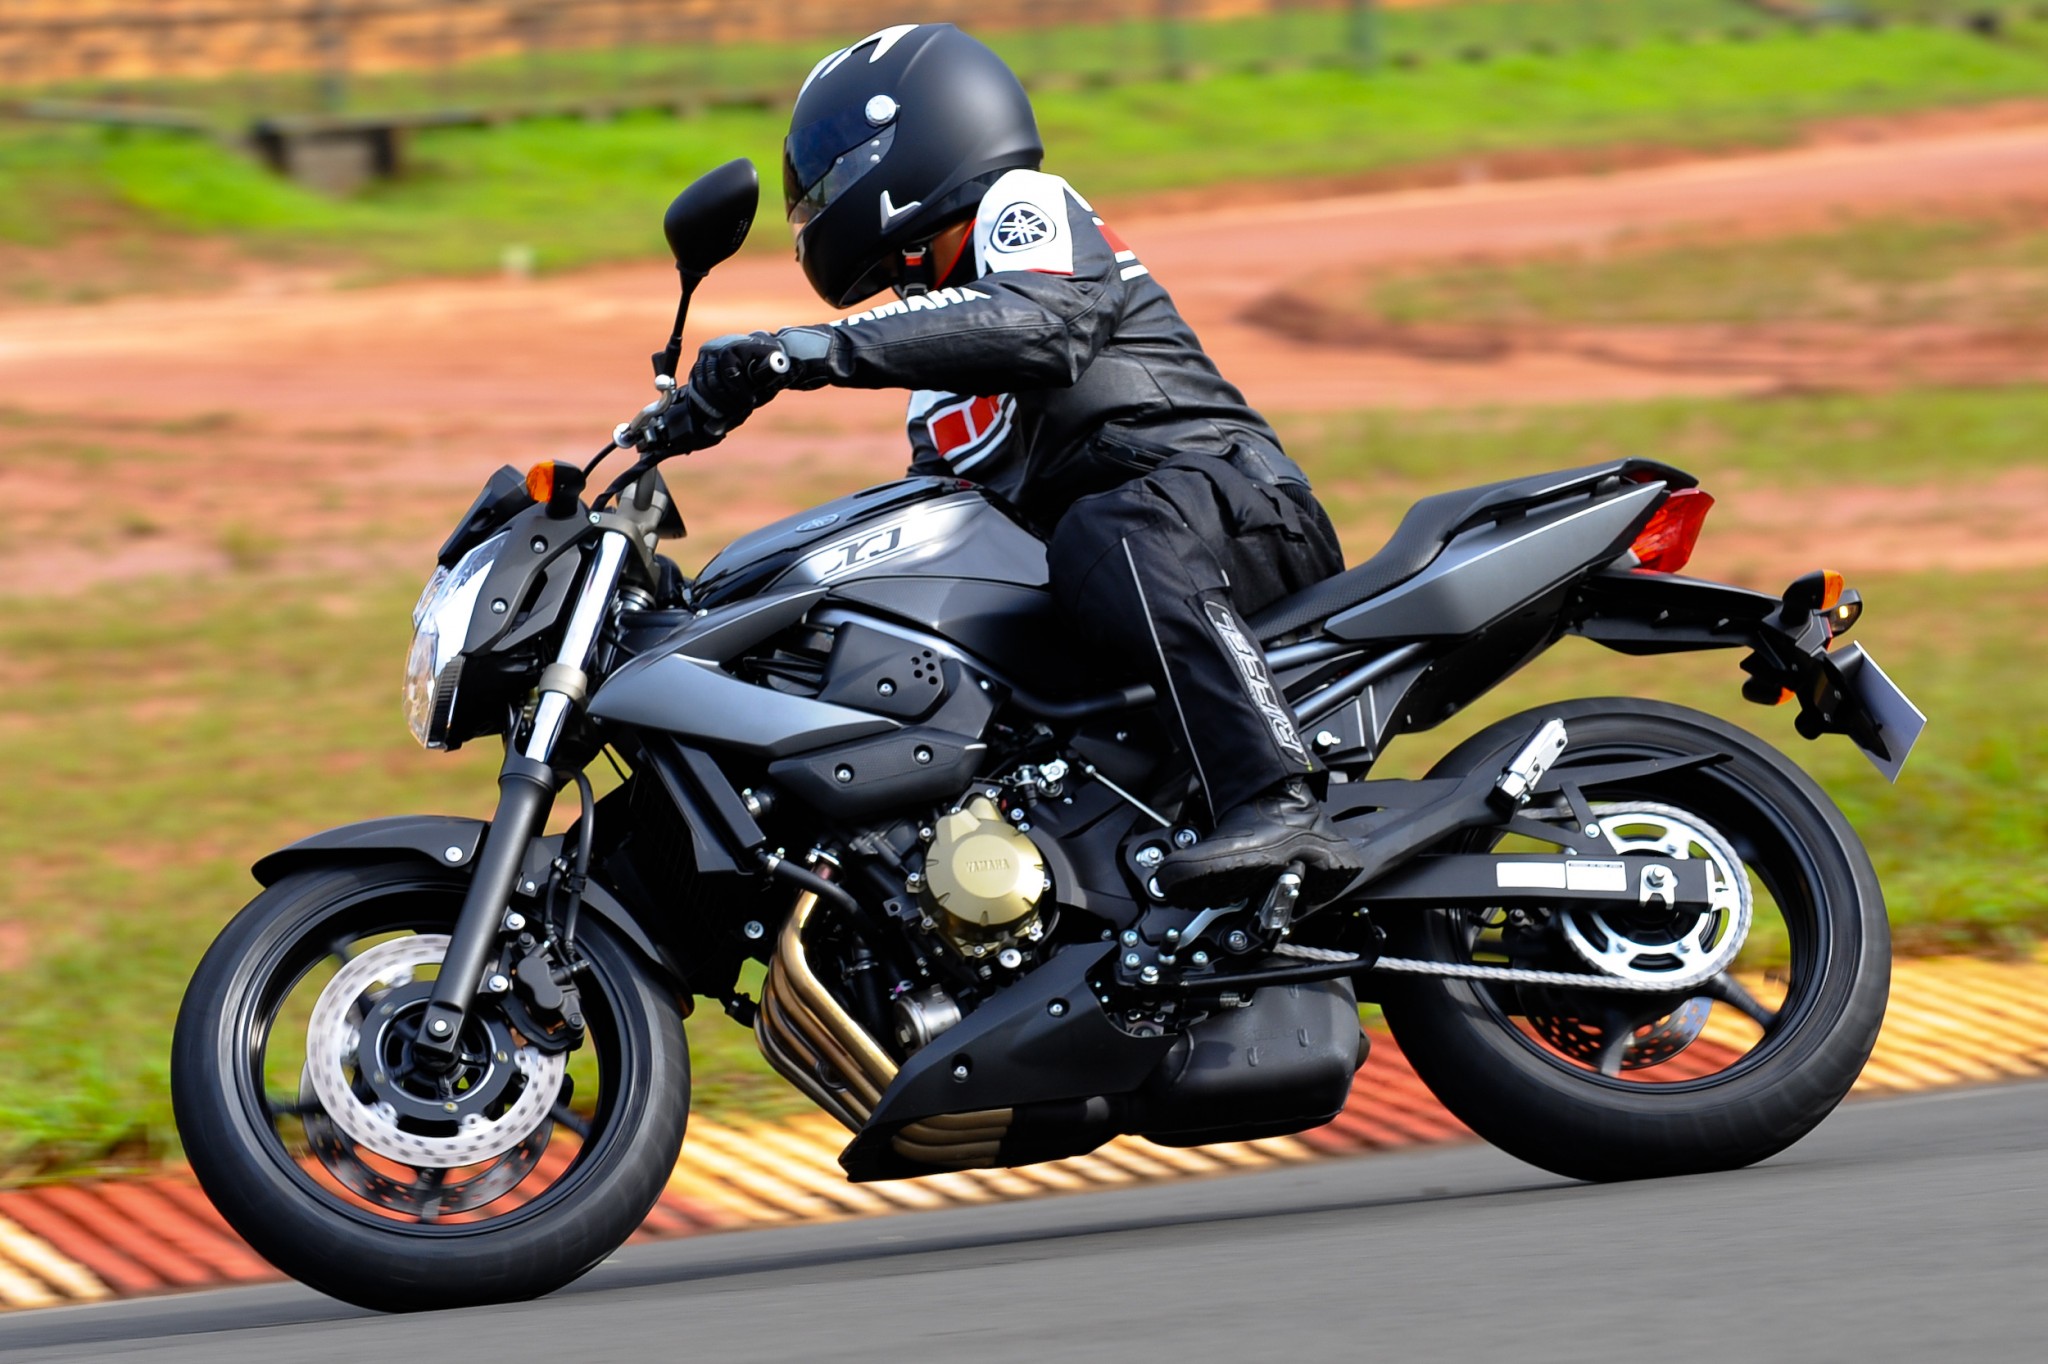 Мотоцикл  xj6 diversion f: технические характеристики, фото, видео